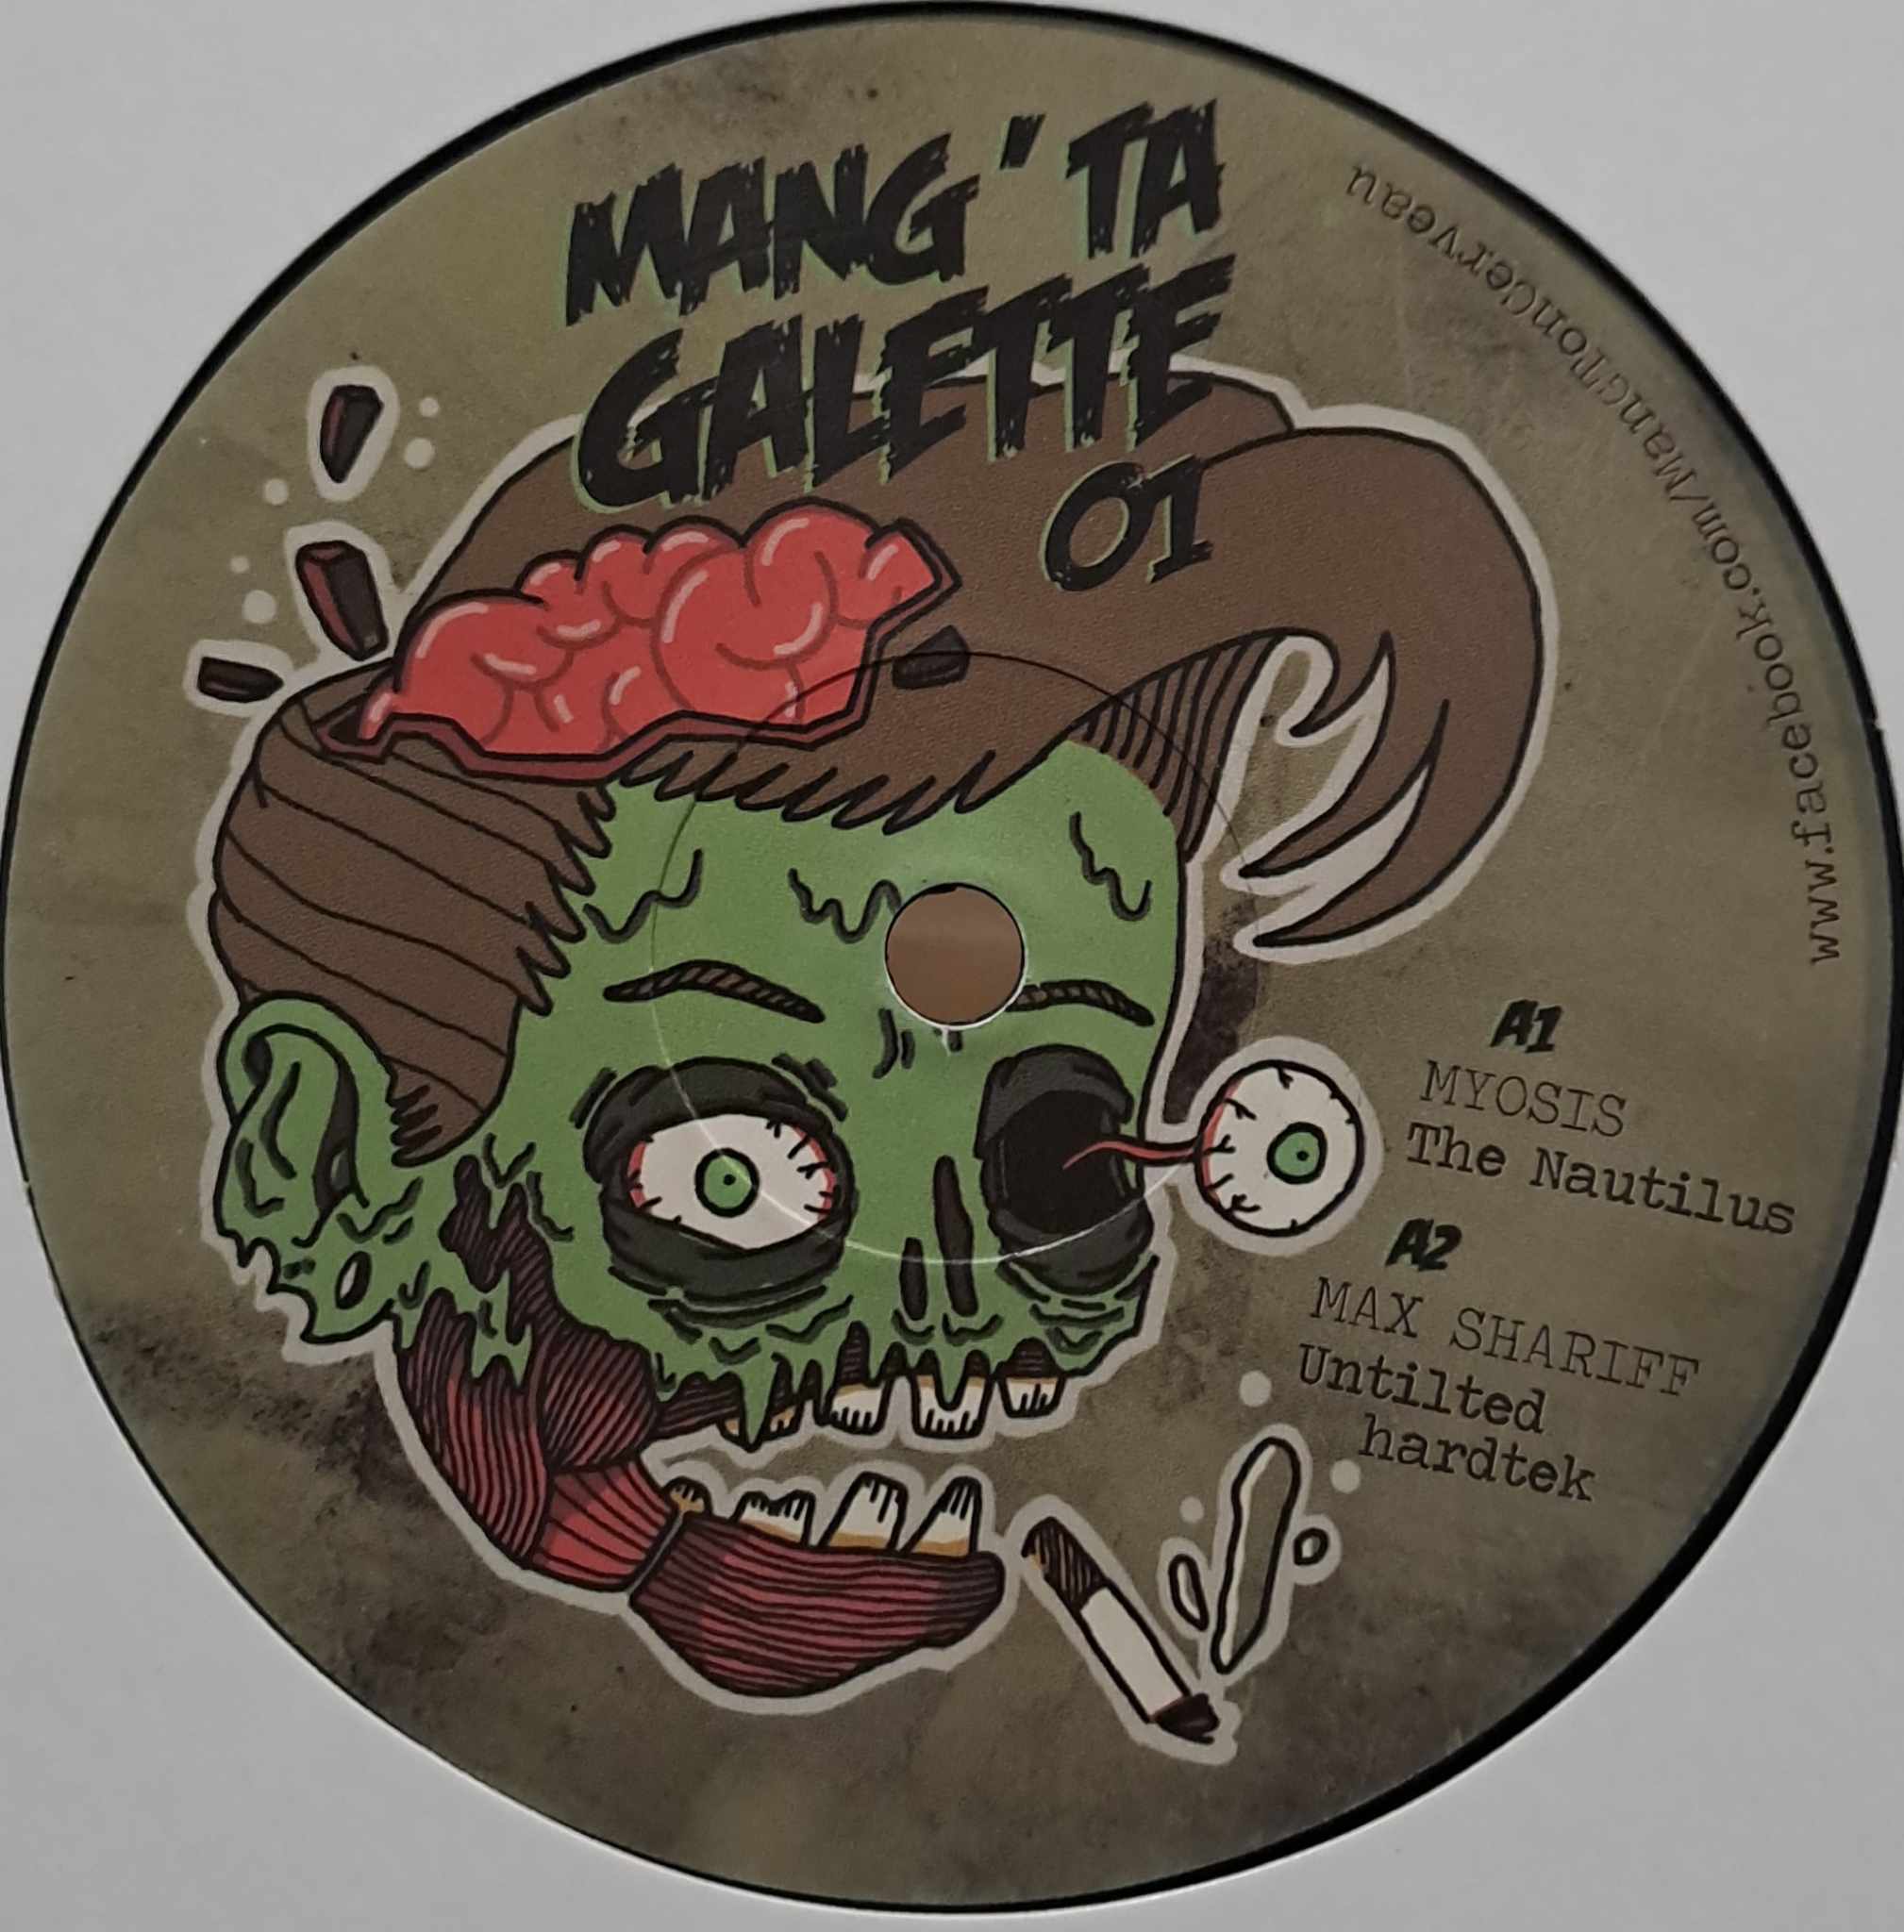 Mang' Ta Galette 01 - vinyle tribecore